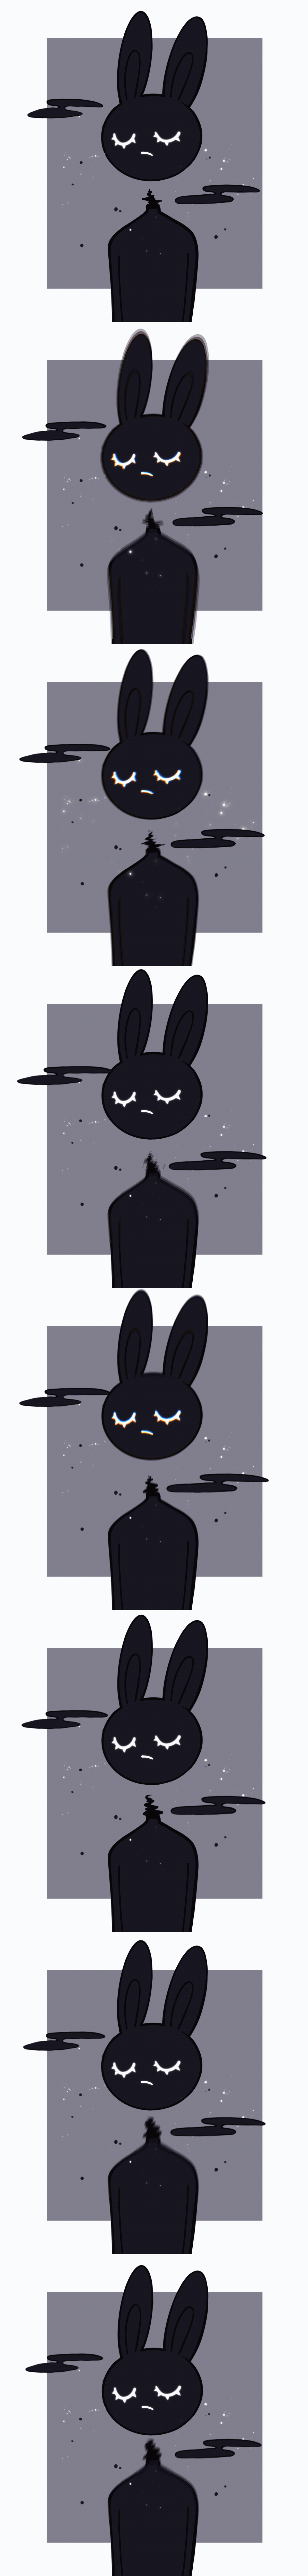 Sick bunny gang #025